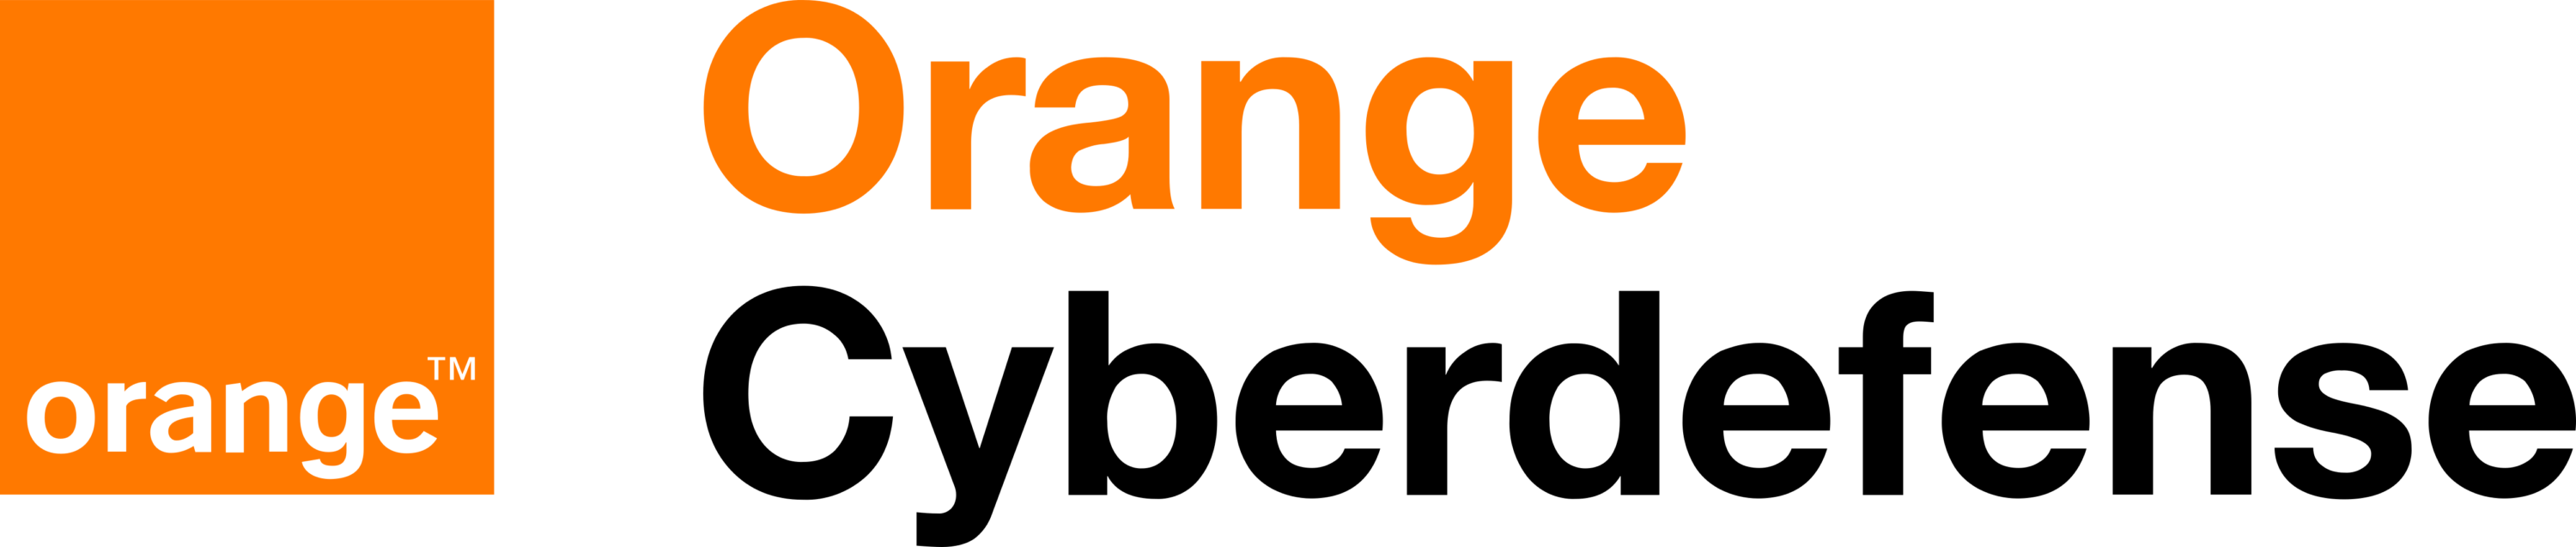 Orange Cyberdefense Logo